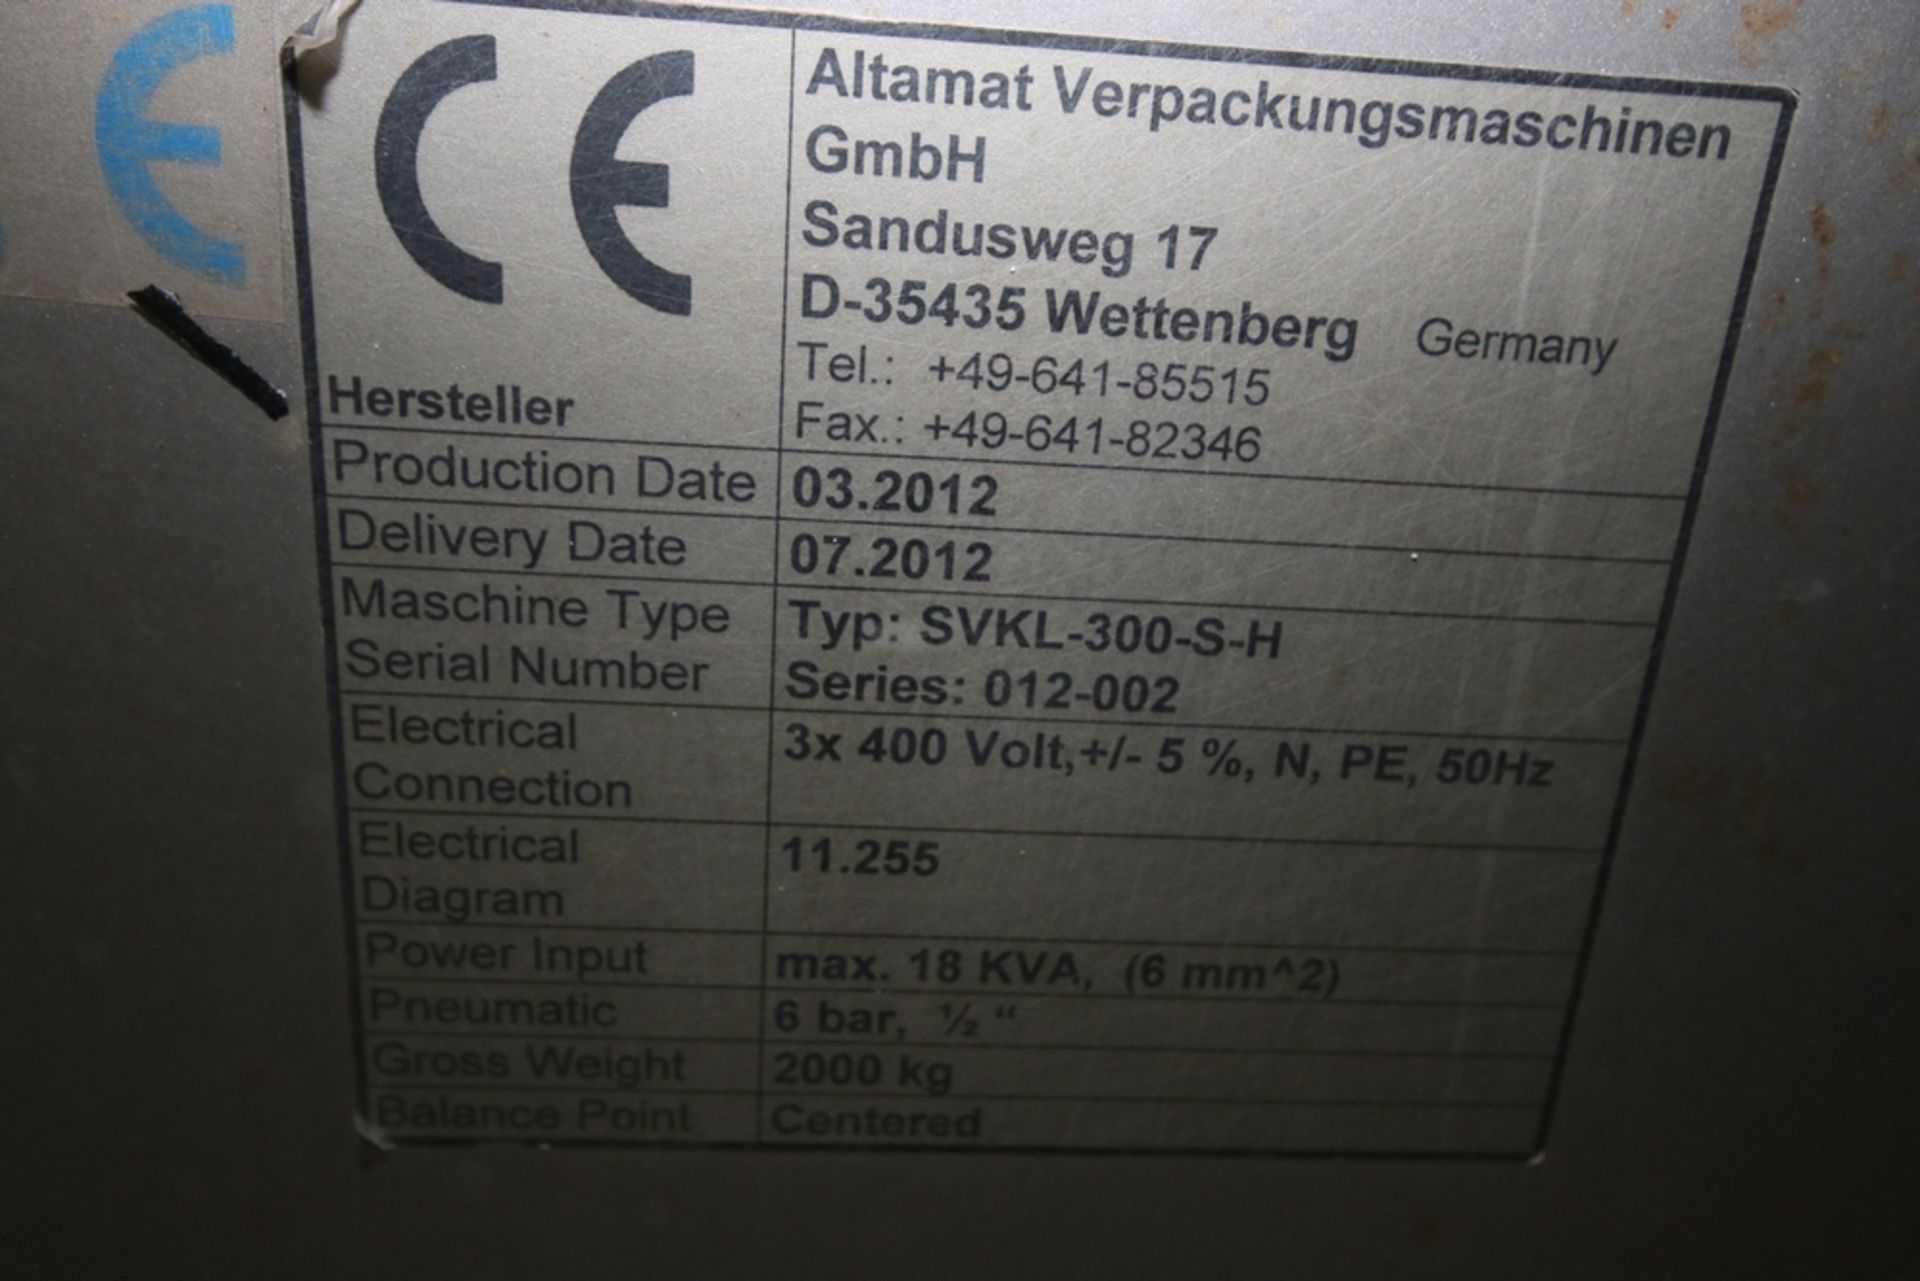 2012 Altamat Verpackungsmaschinen GmbH Sandusweg 17 VFFS, Type: SVKL-300-S-H, S/N 012-002, with - Image 6 of 10